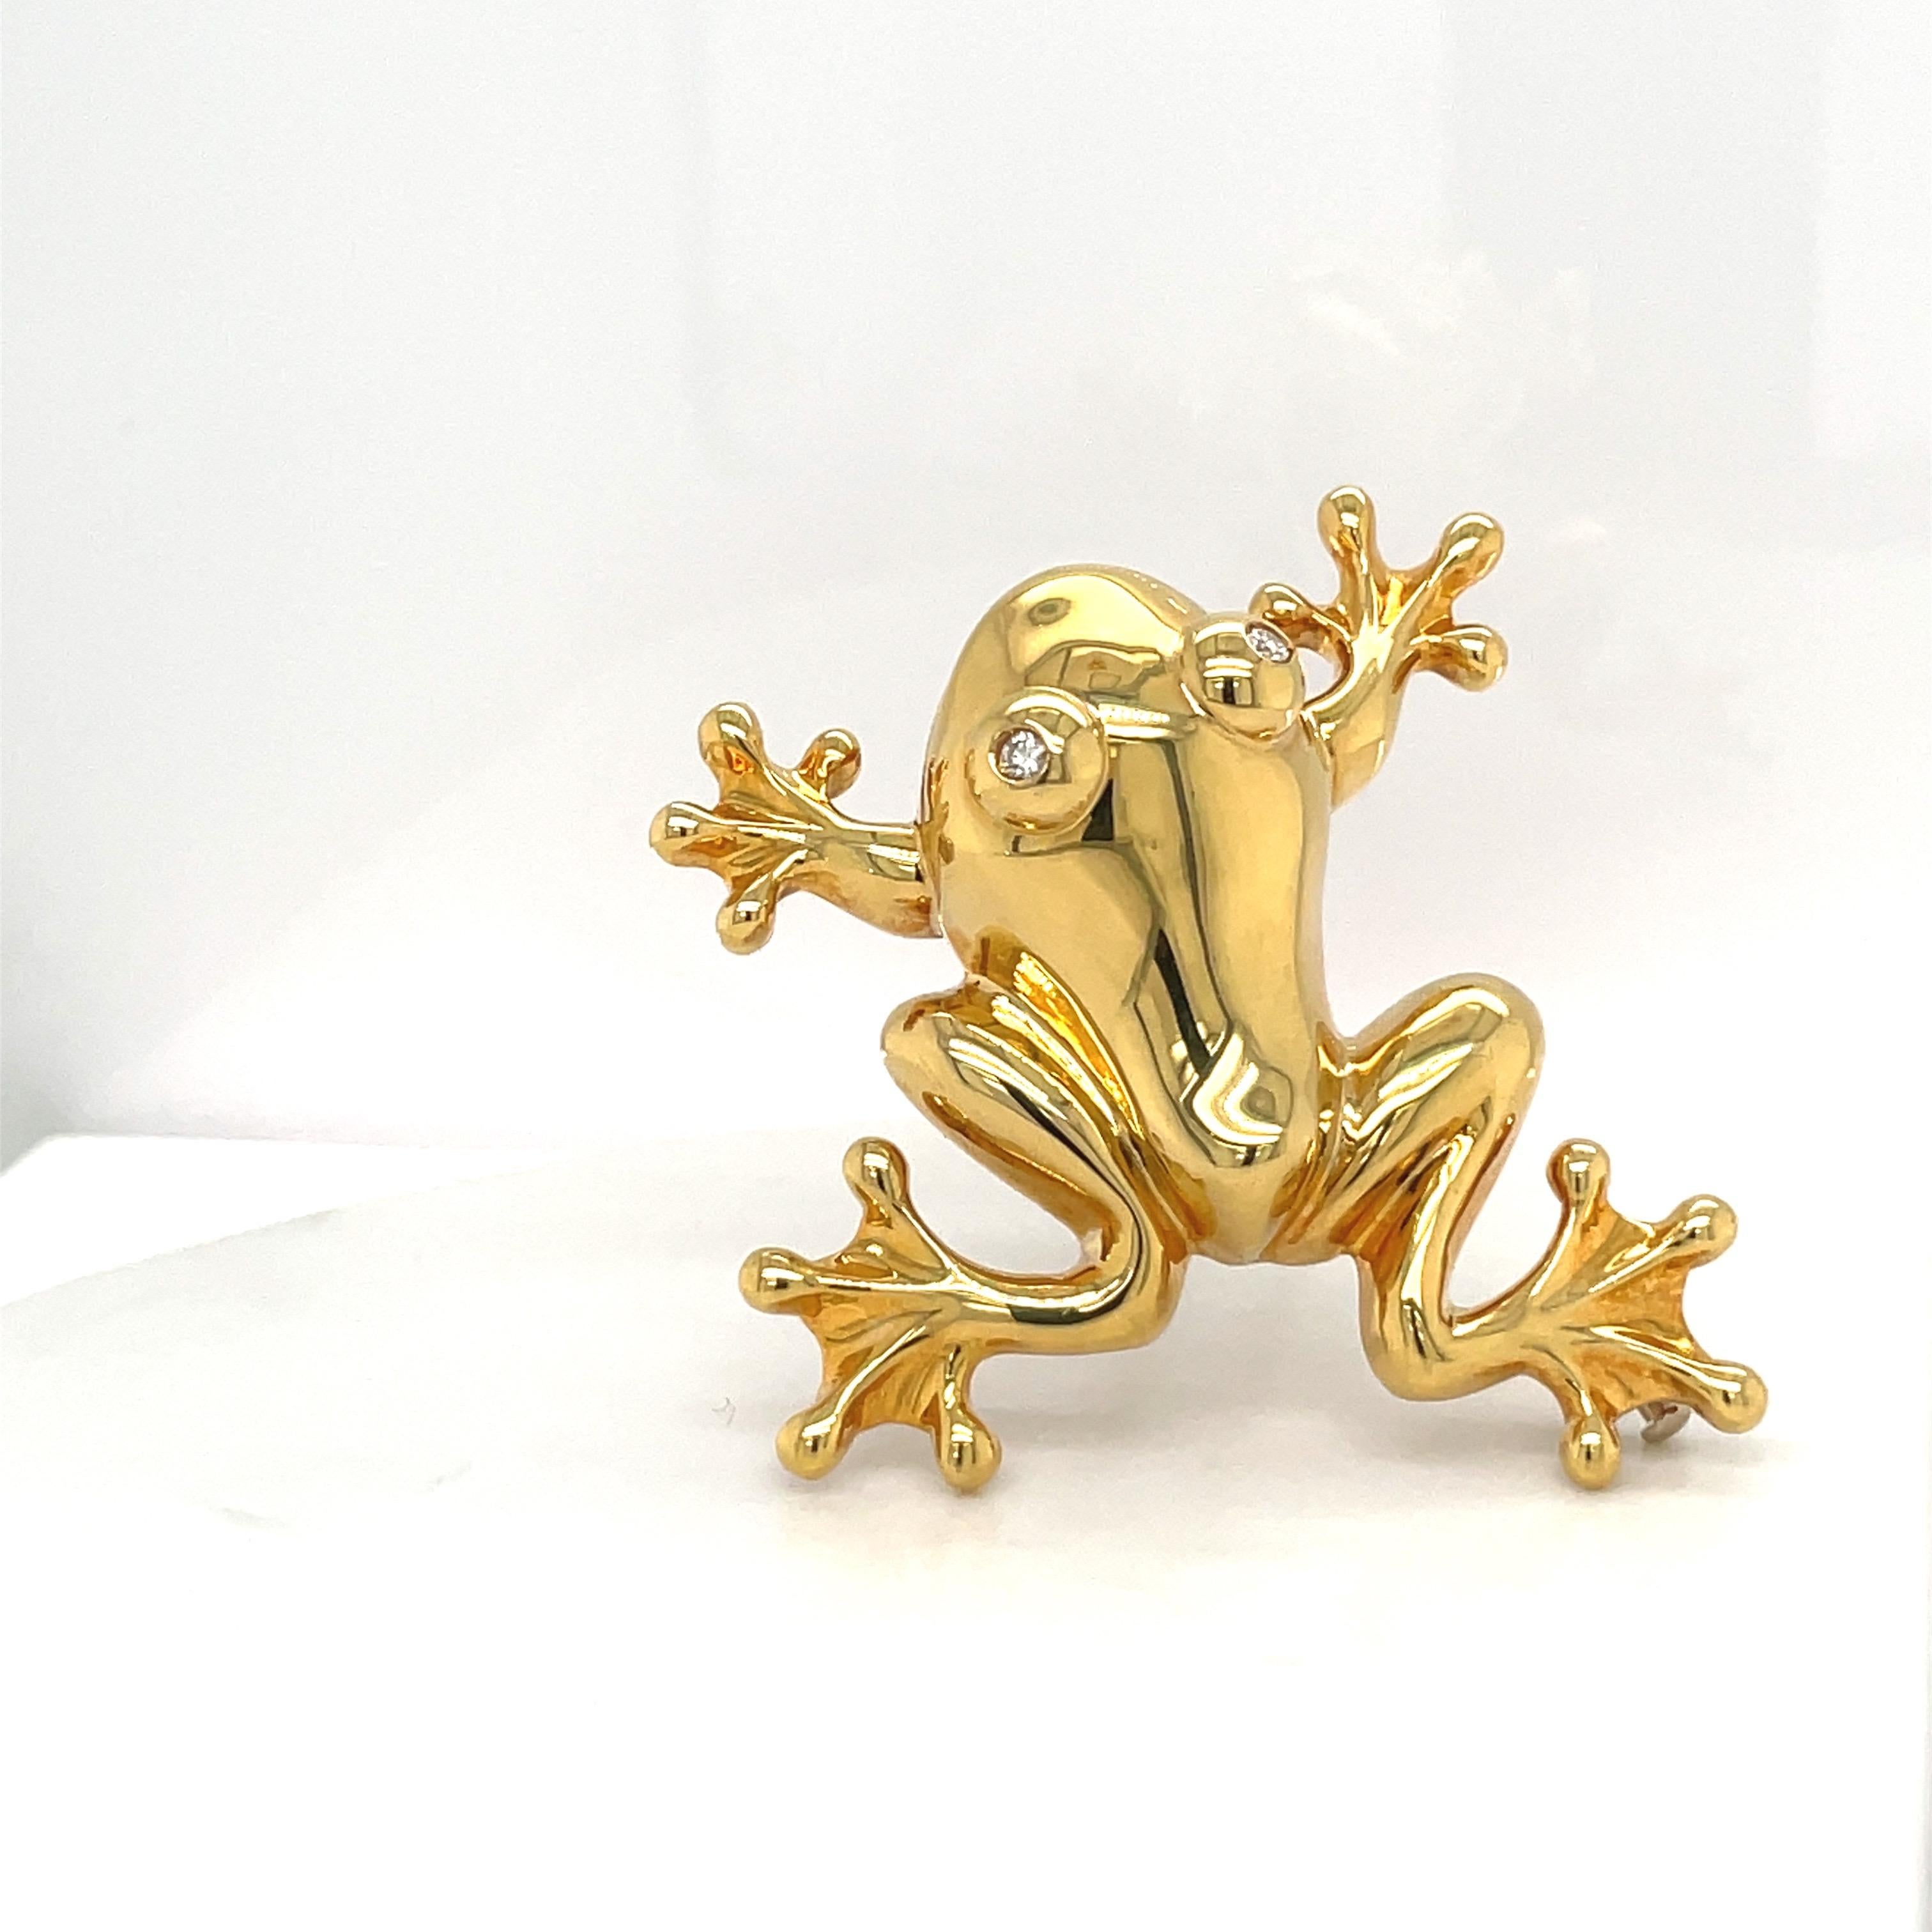 Contemporary Roberto Legnazzi 18 Karat Yellow Gold Bullfrog Brooch with Diamond Eyes For Sale